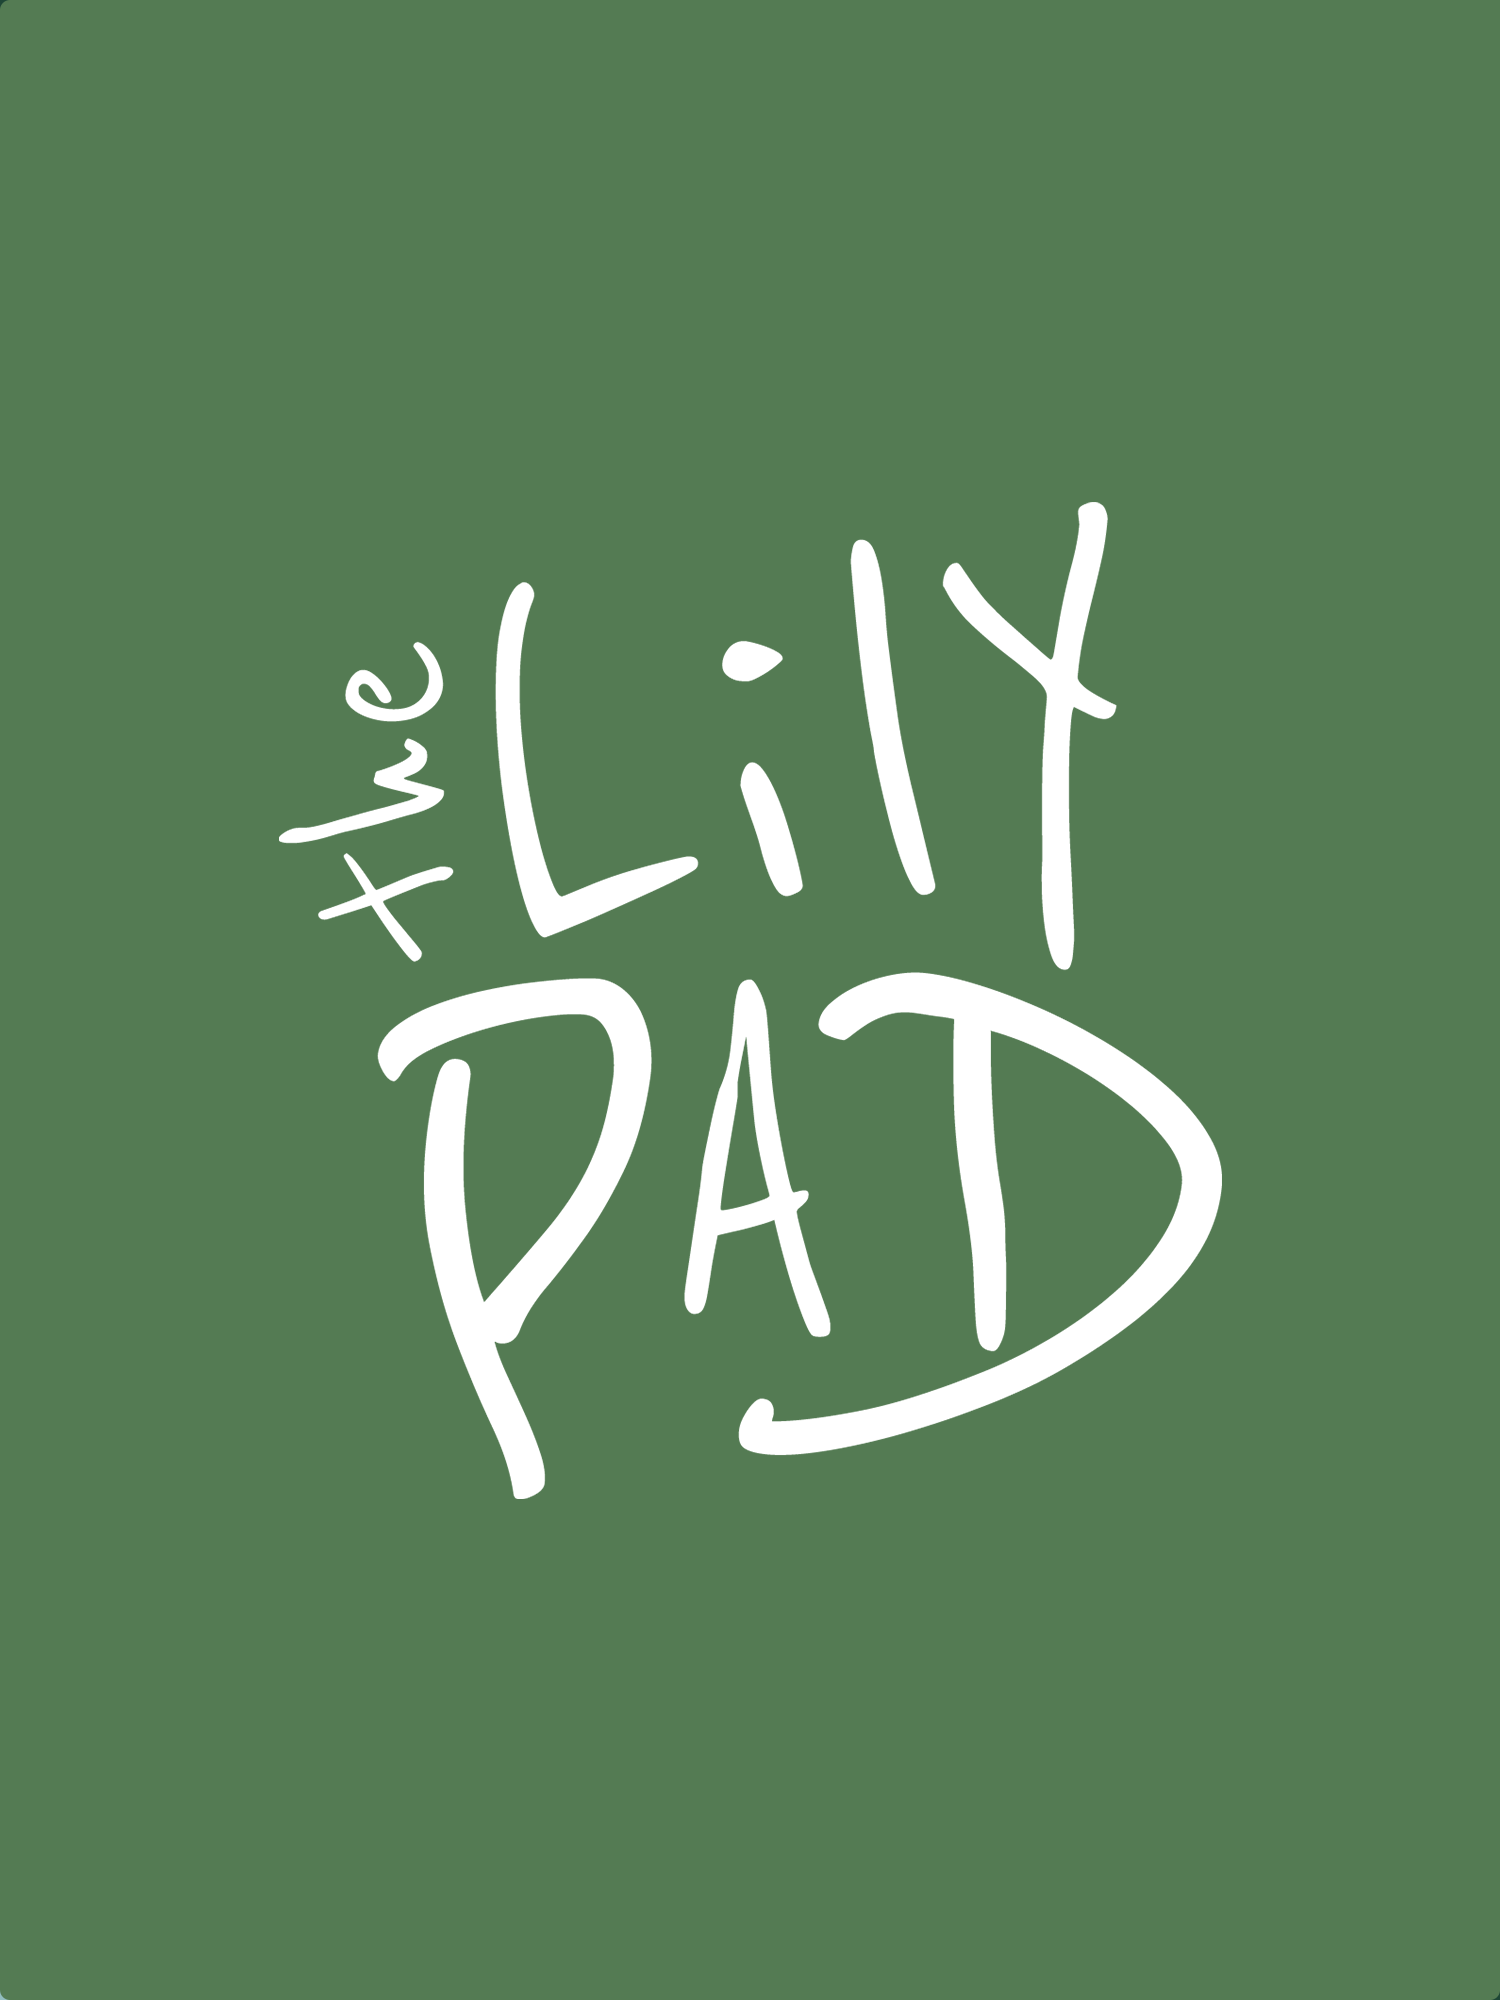 The Lilypad